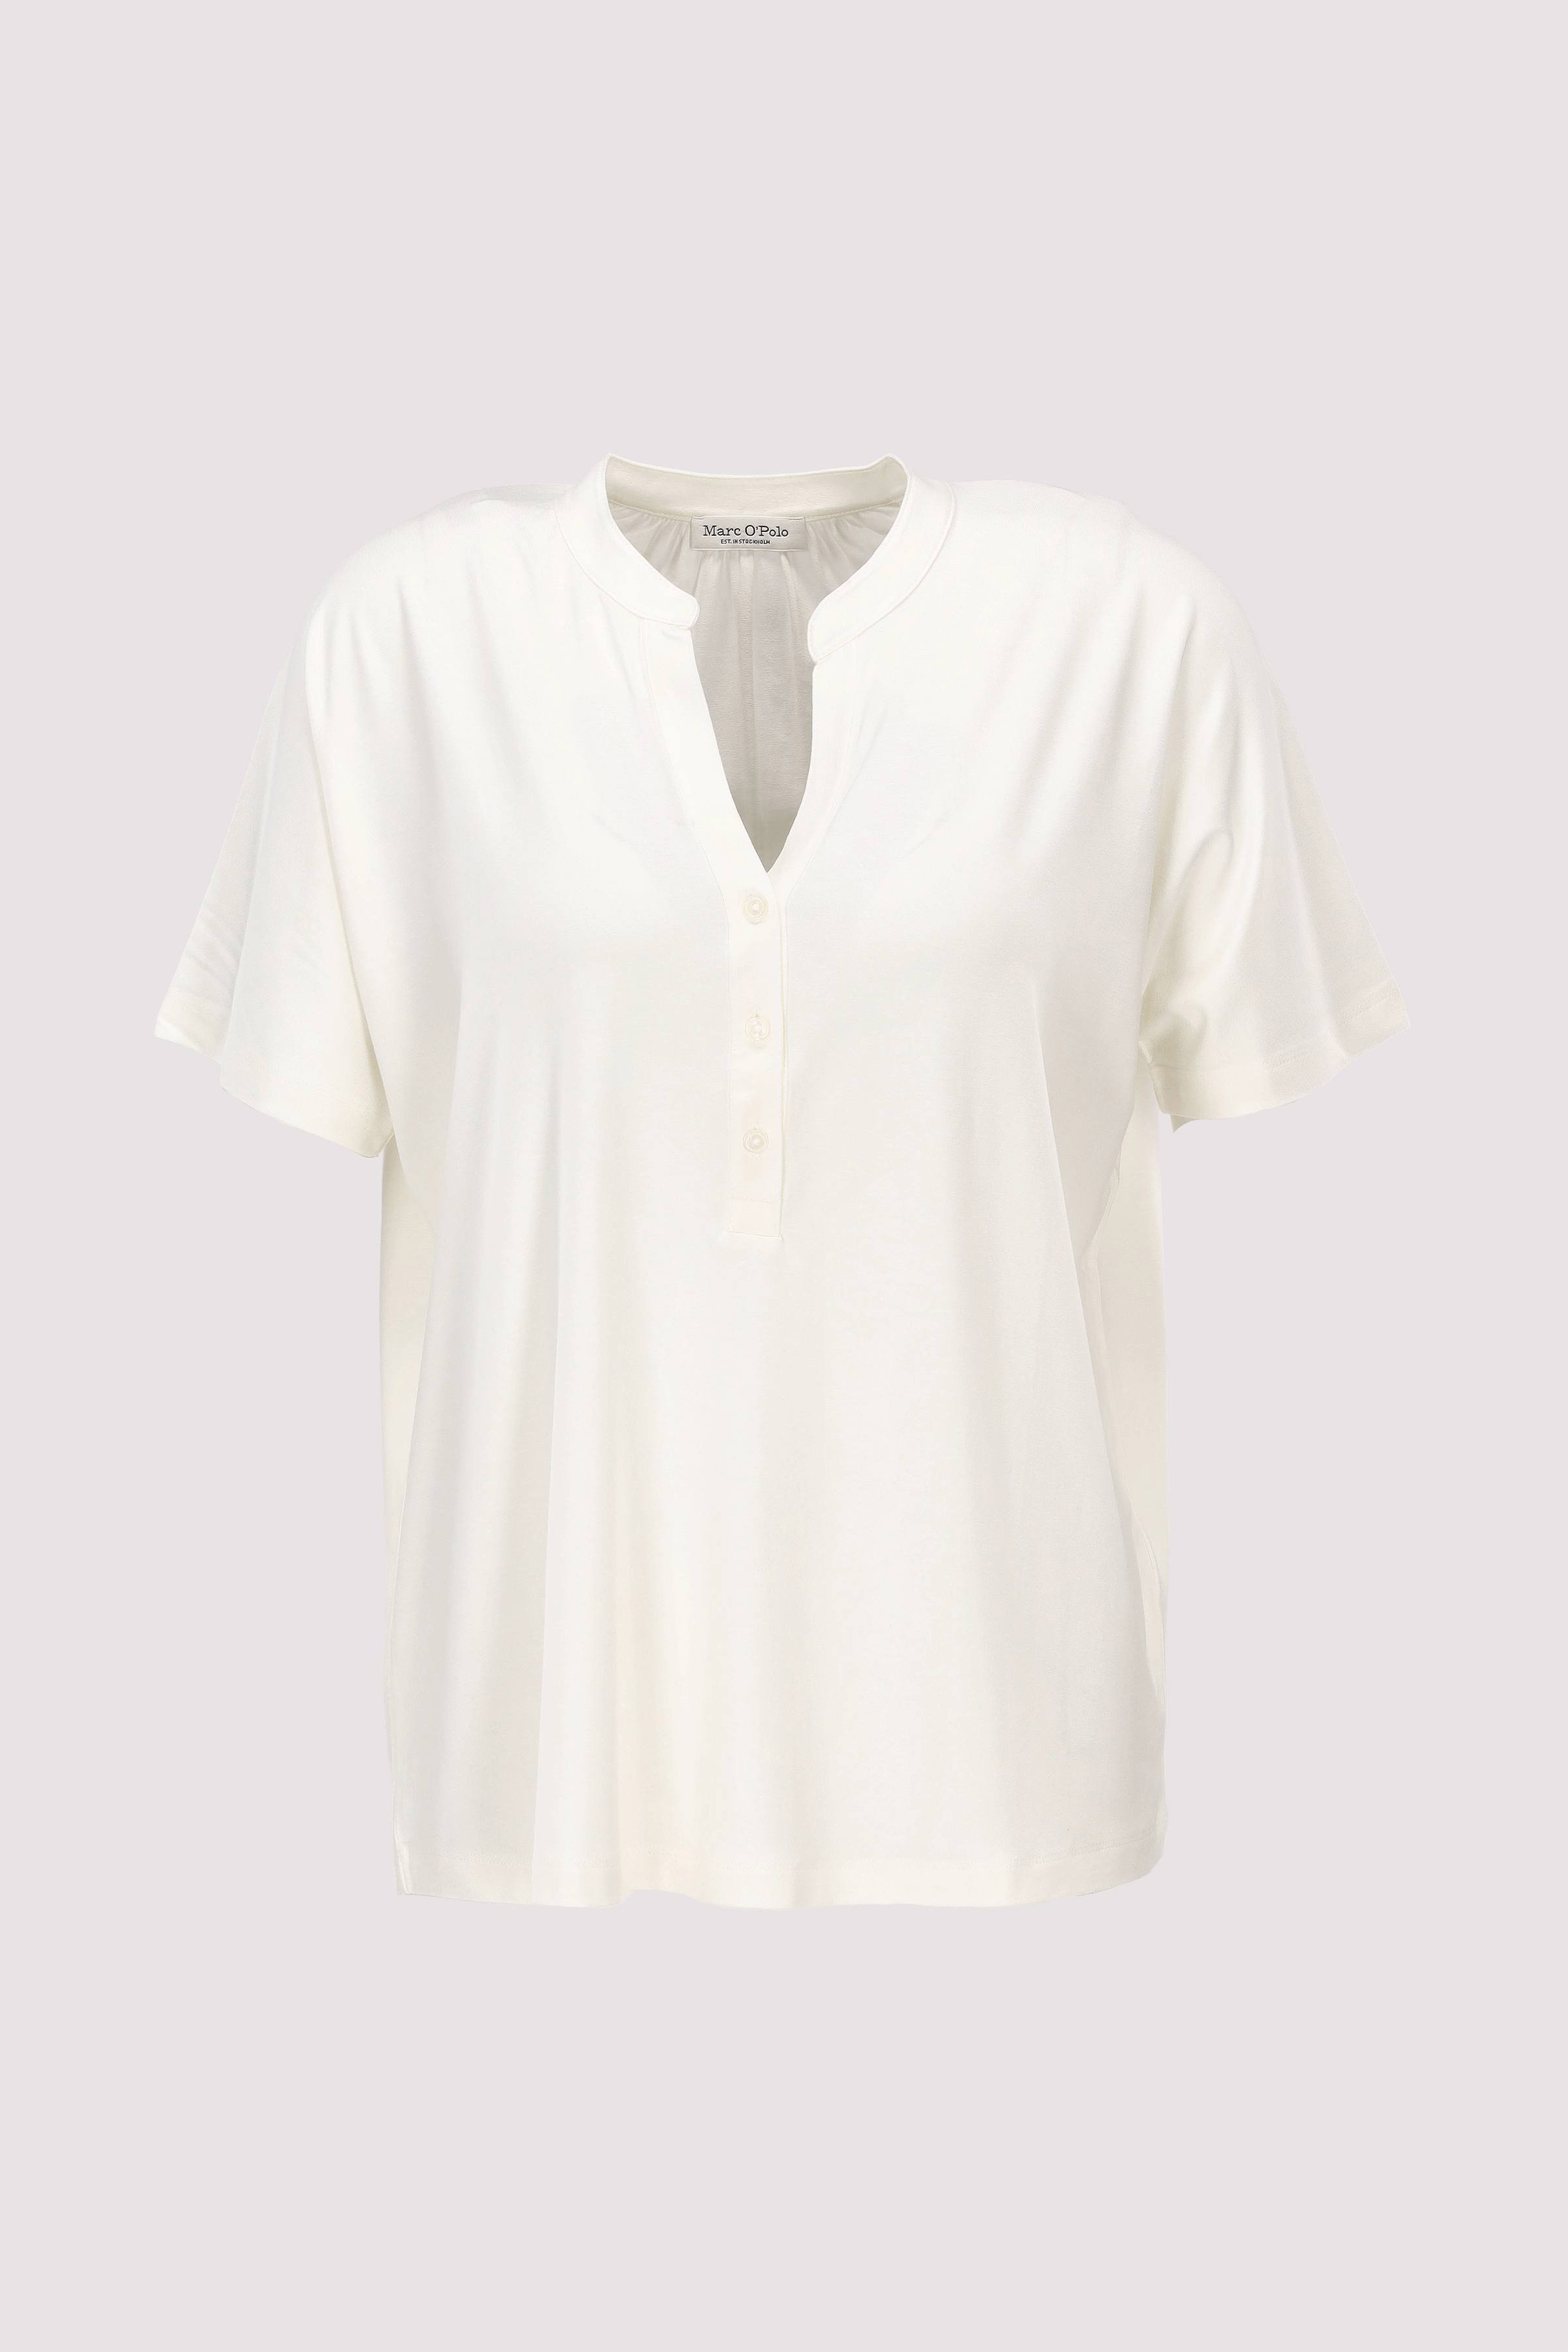 Jersey-blouse, short-sleeve, p